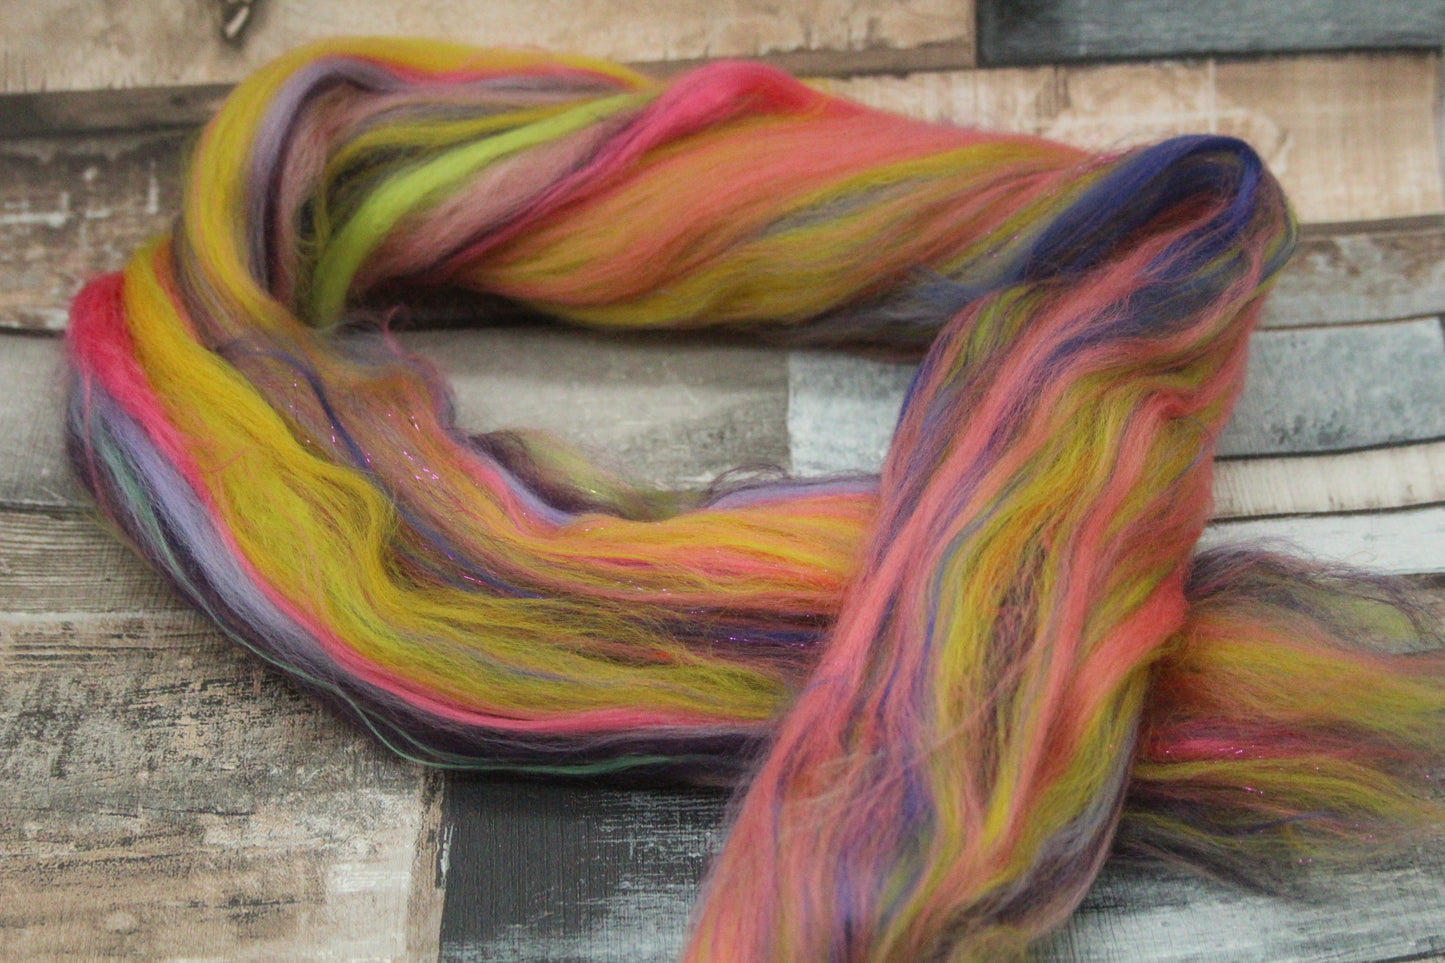 Merino Wool Blend - Pink Yellow Purple Green - 24 grams / 0.8 oz  - Fibre for felting, weaving or spinning